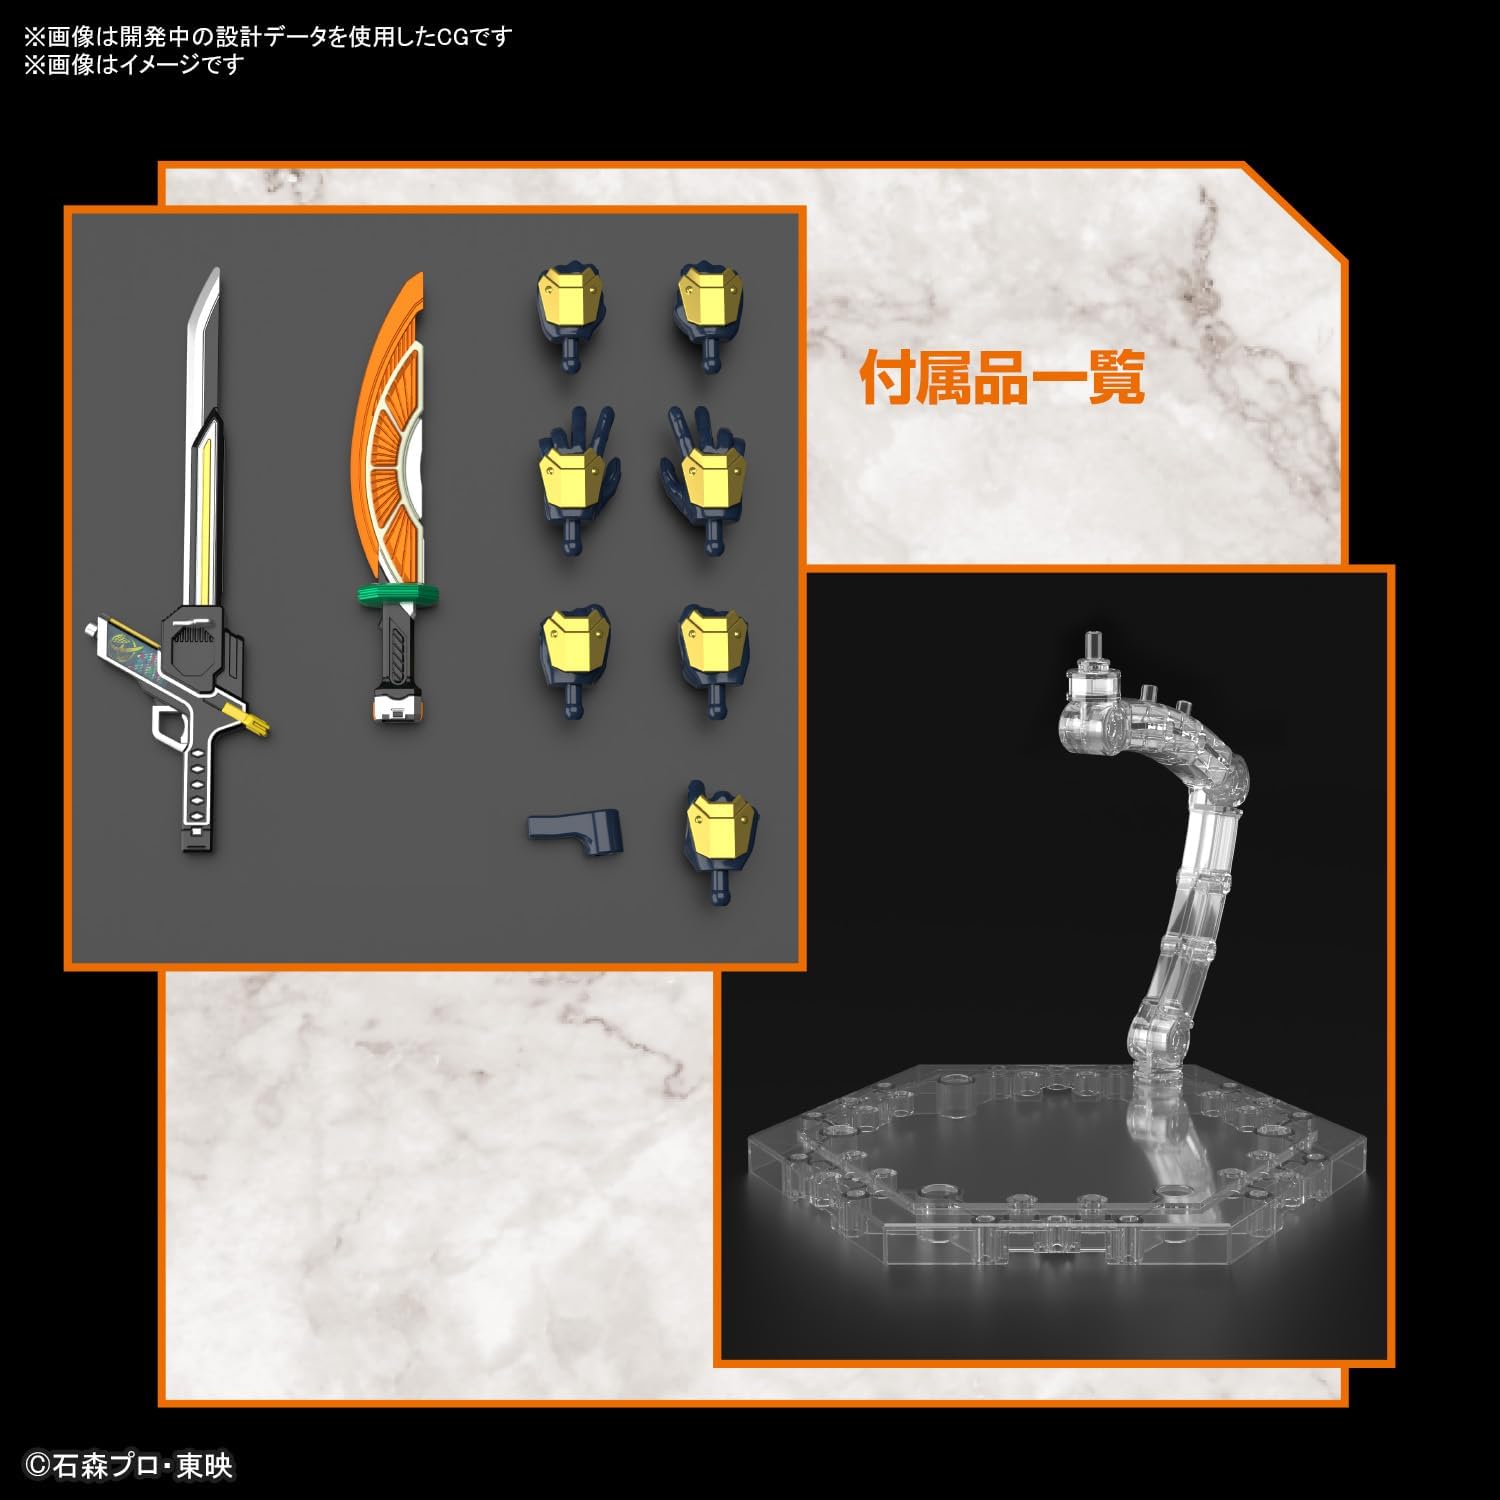 BANDAI SPIRITS Figure-Rise Standard Kamen Rider Armor Orange Arms - BanzaiHobby